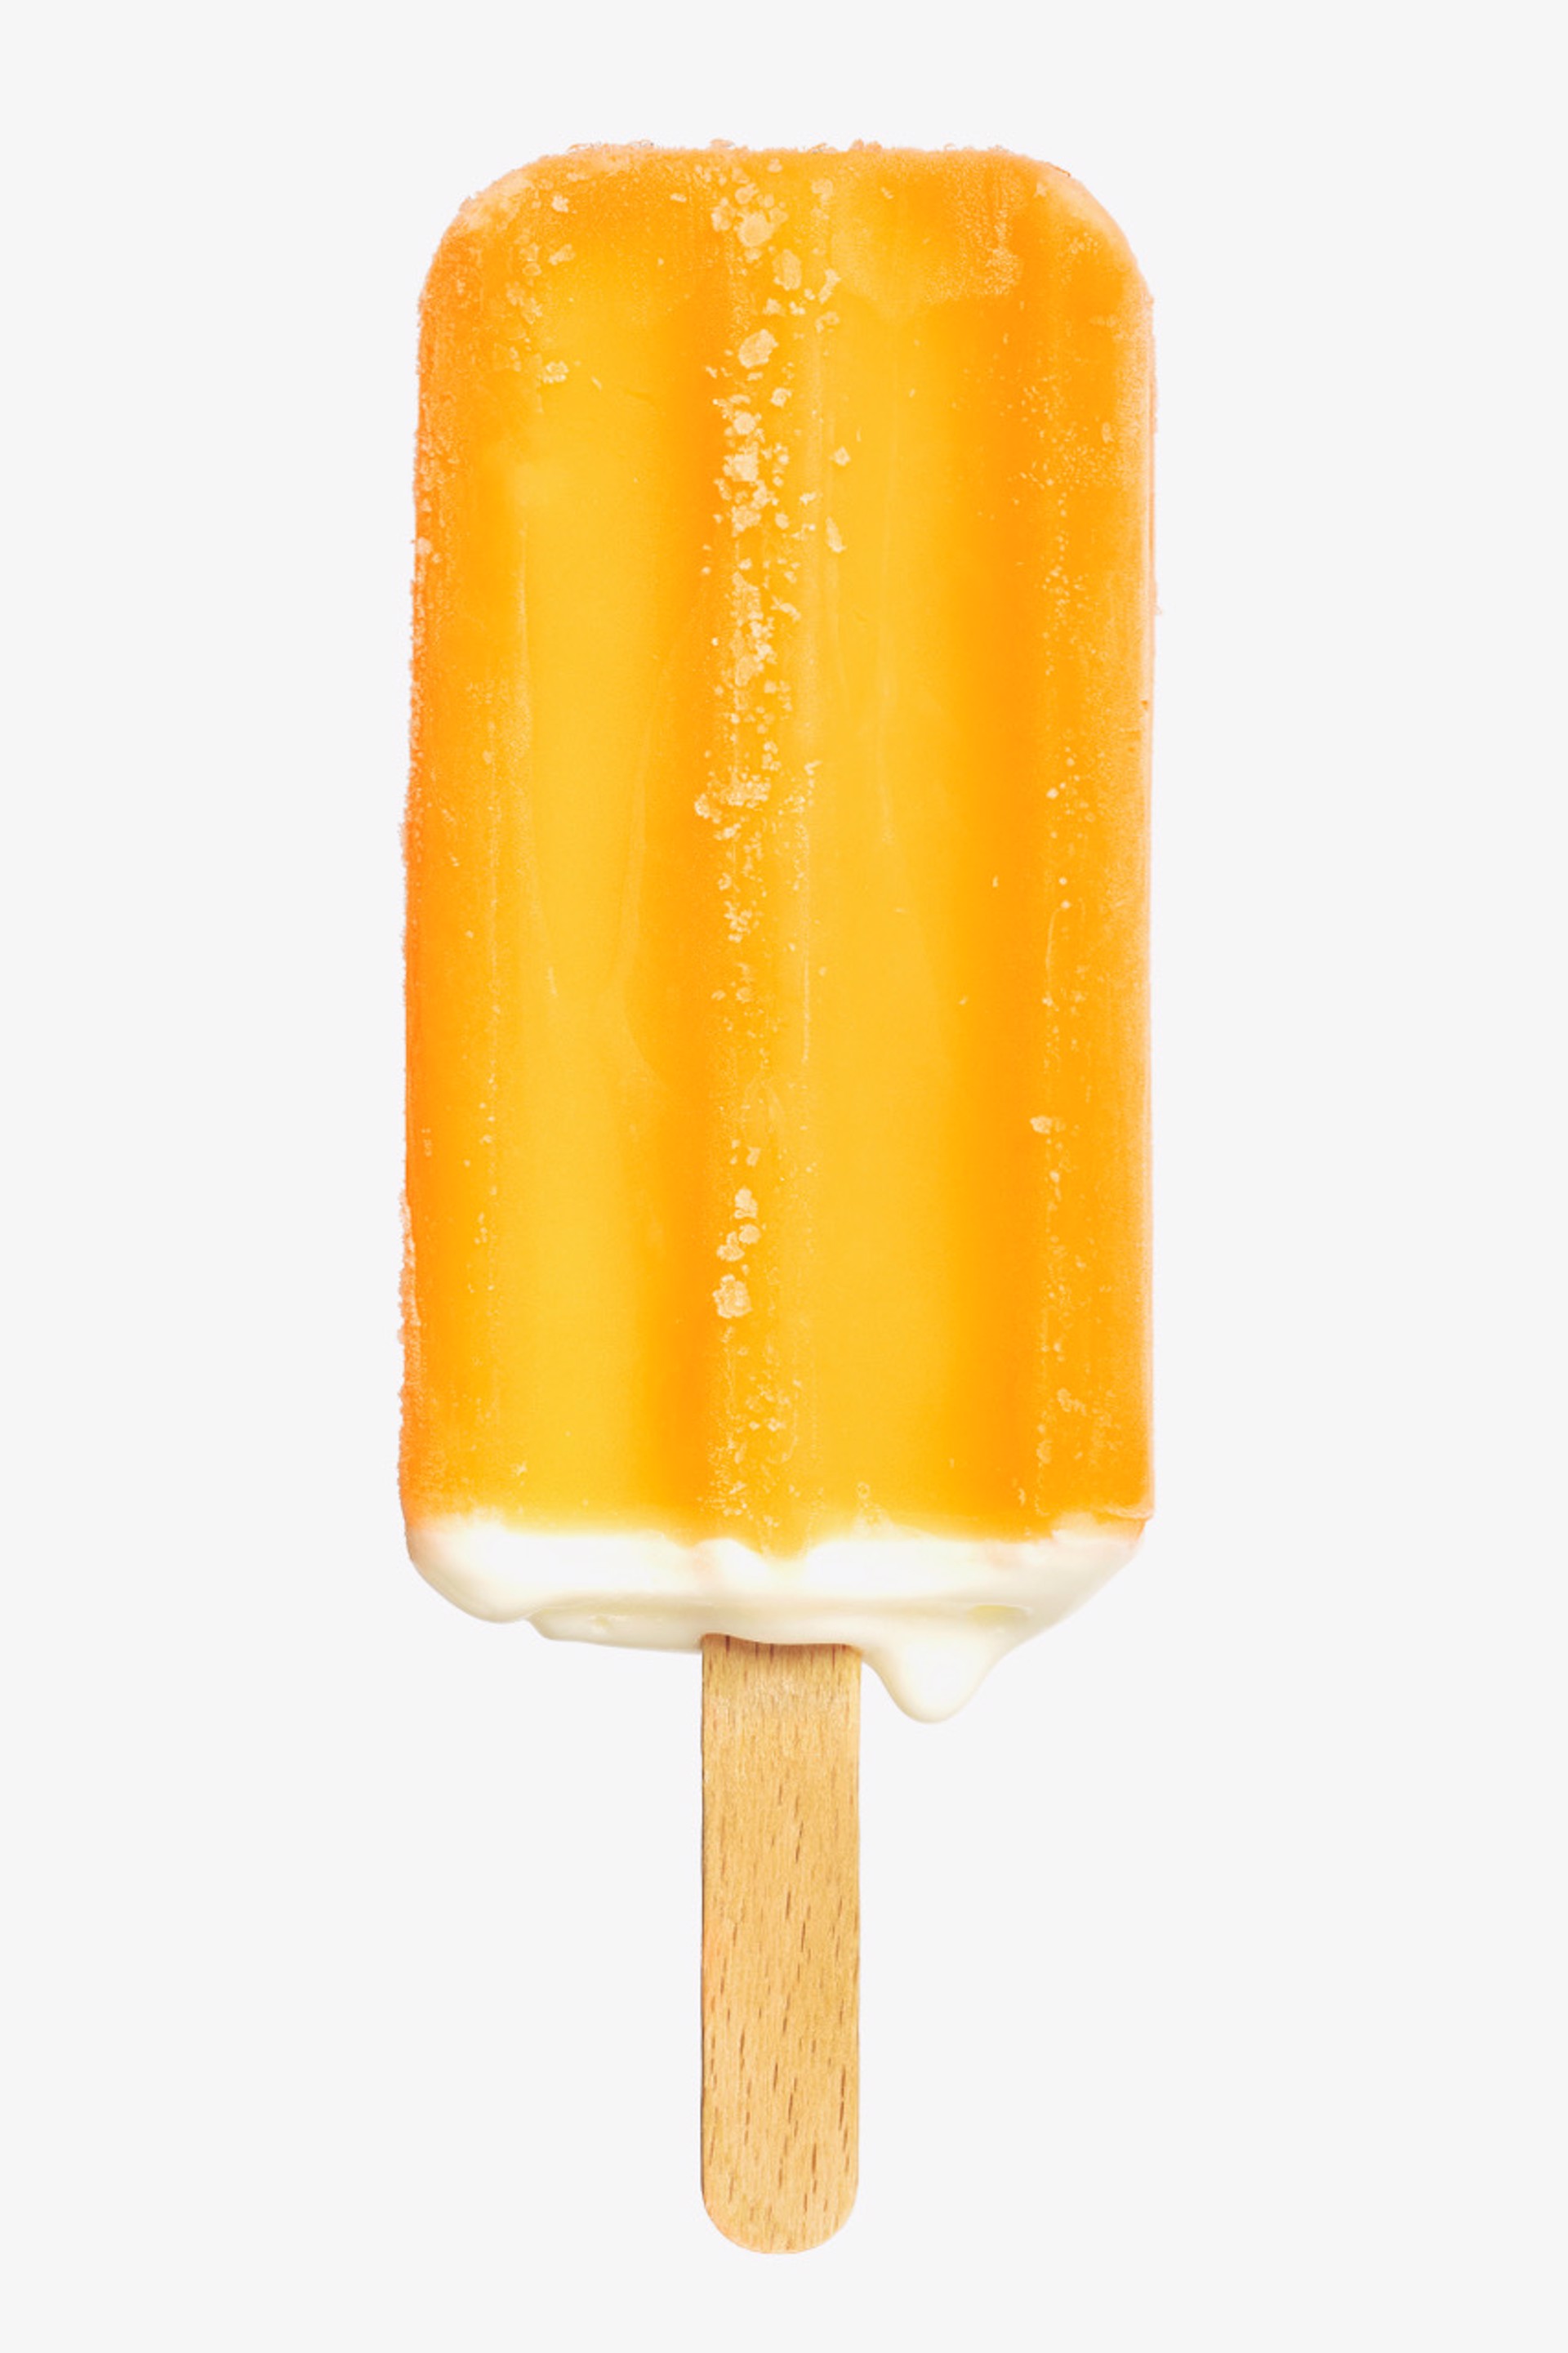 Orange Creamsicle by Peter Andrew Lusztyk / Refined Sugar